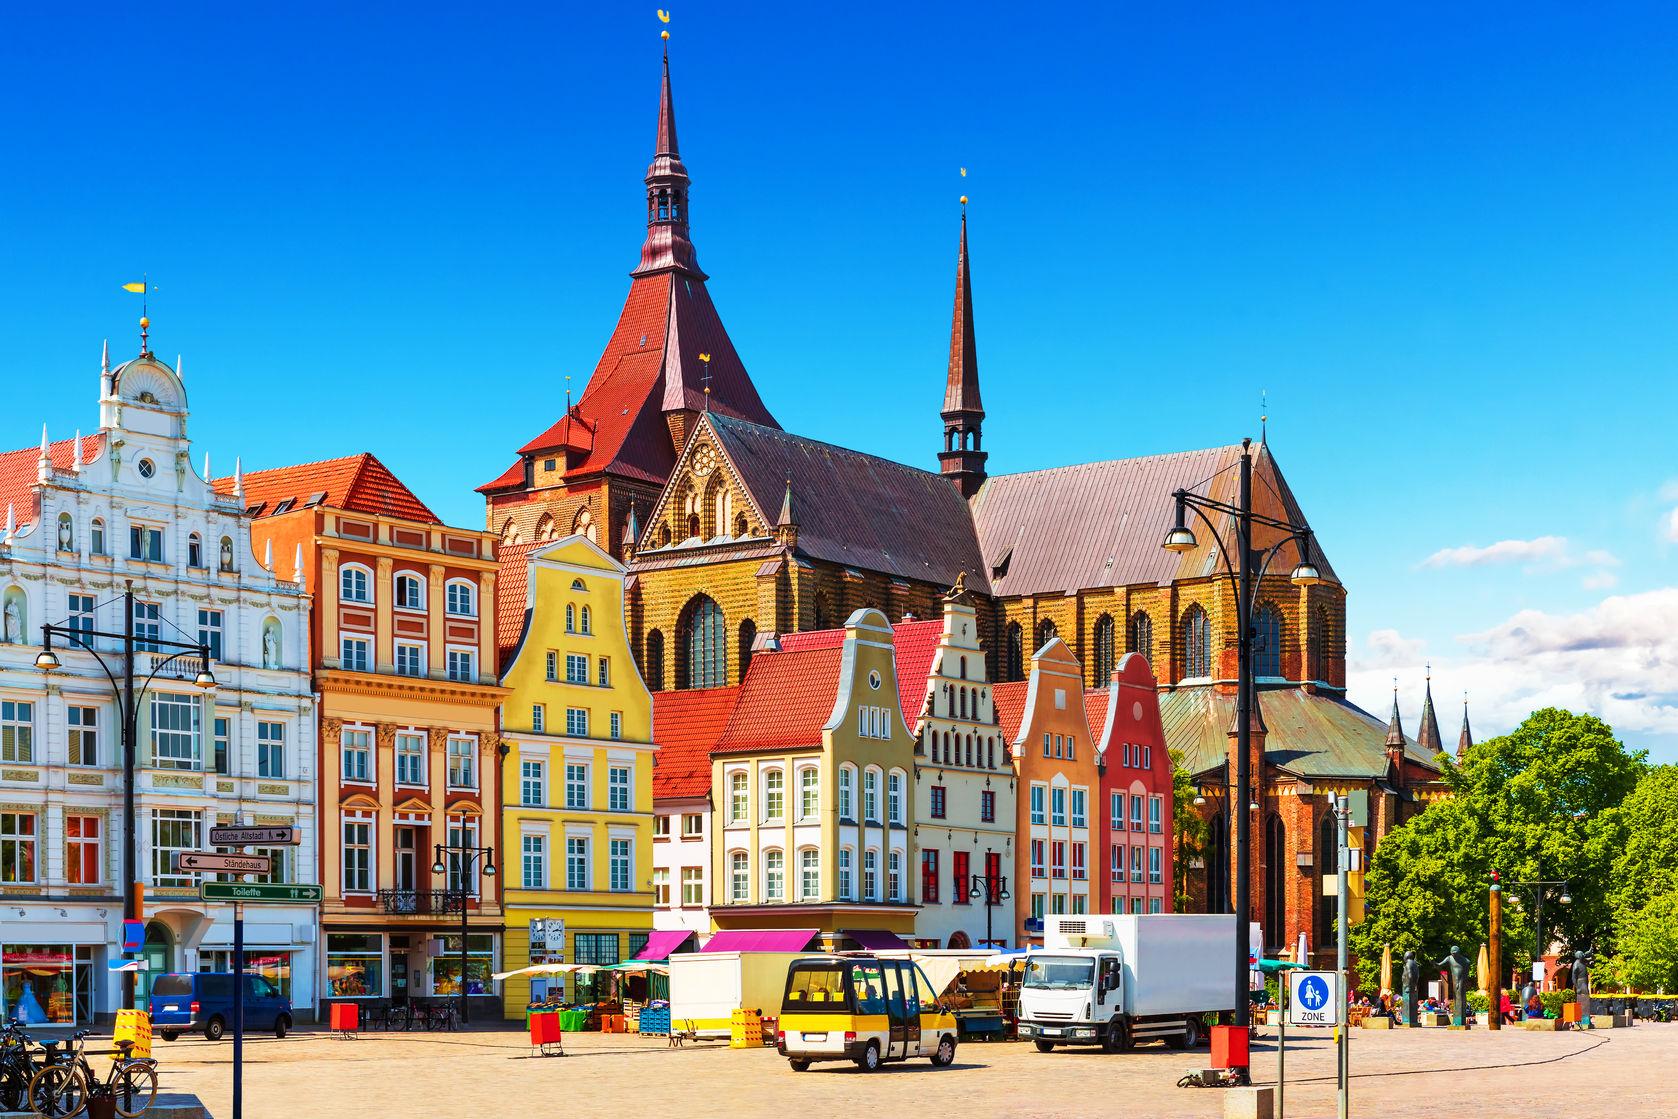 The Rostock city, cover photo